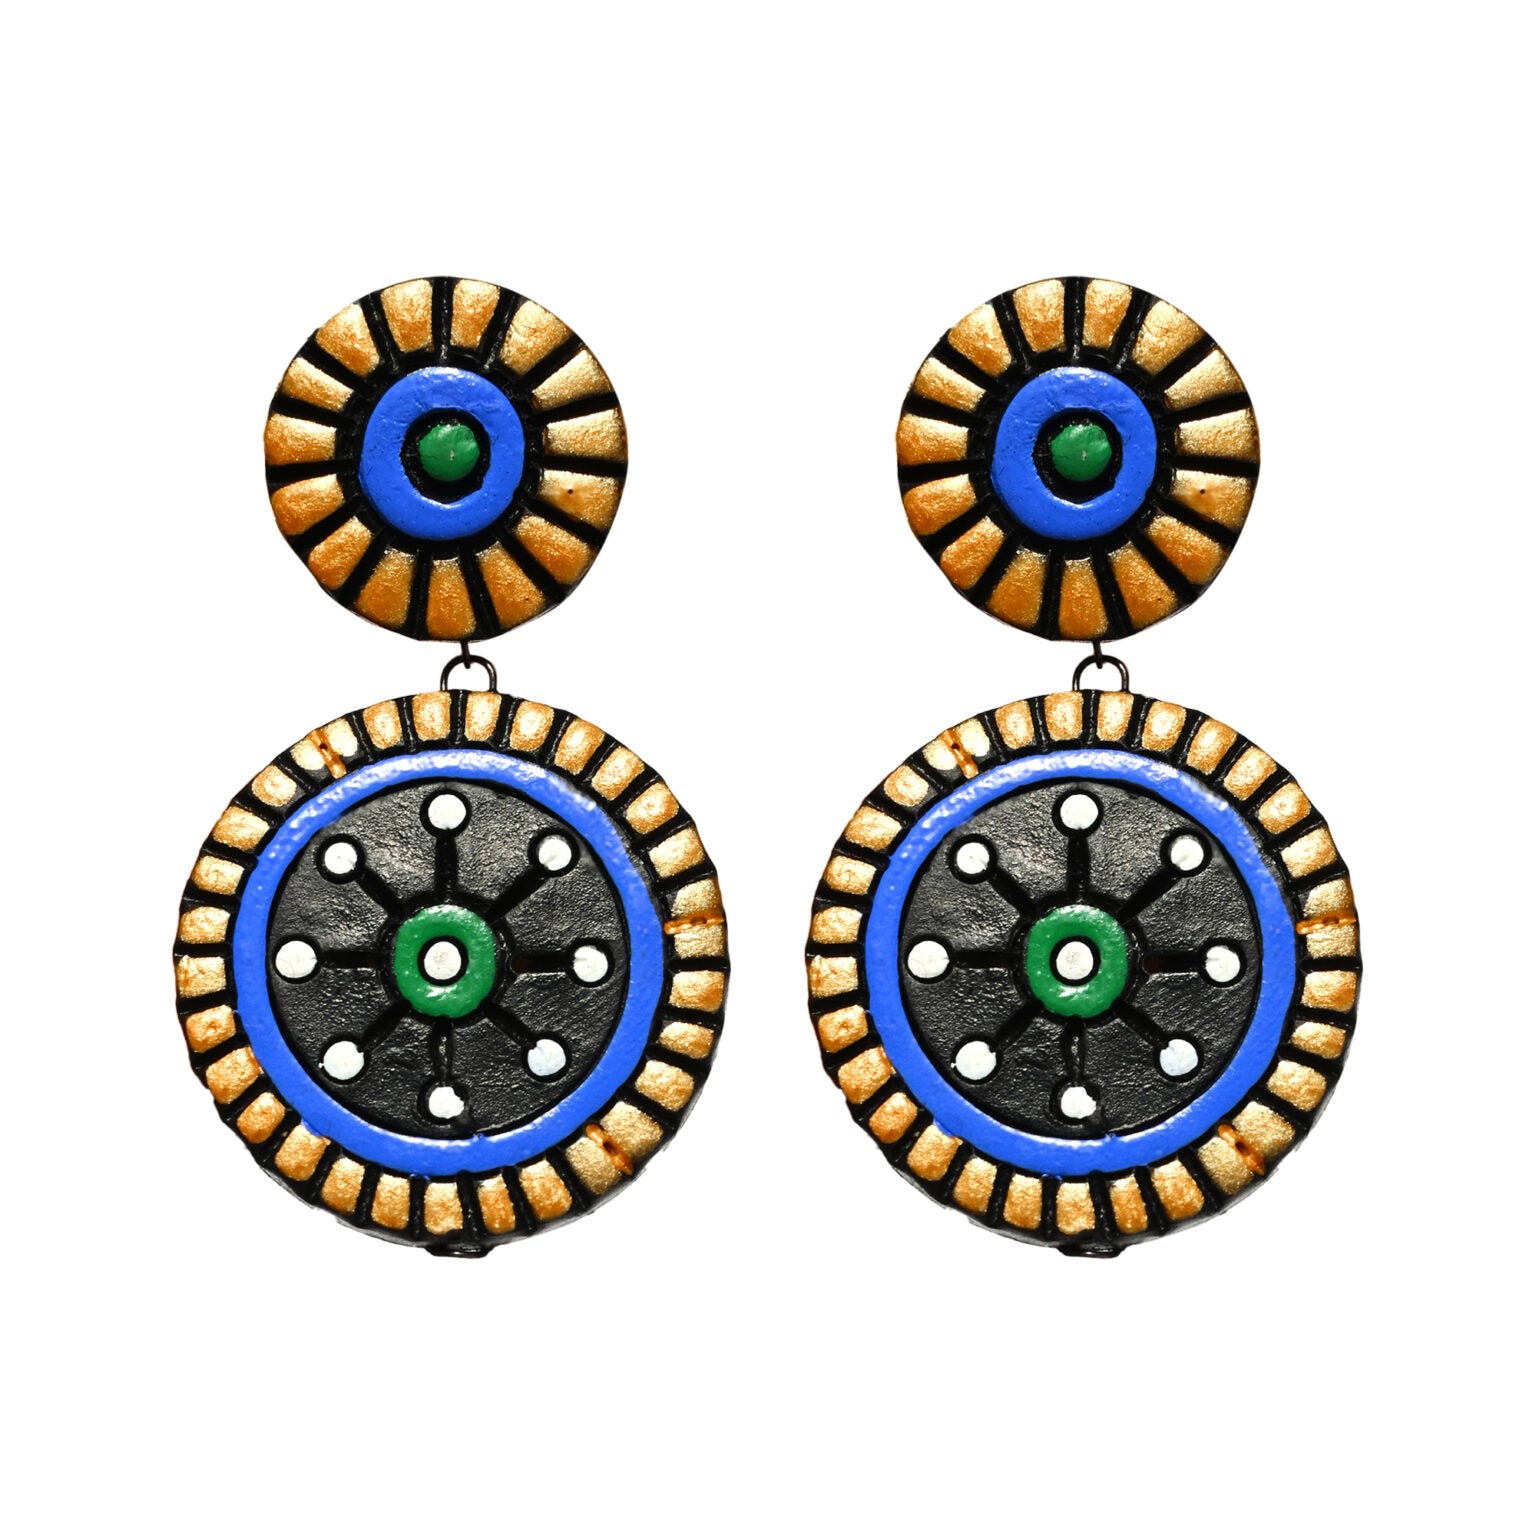 Blue and black earrings in terracotta